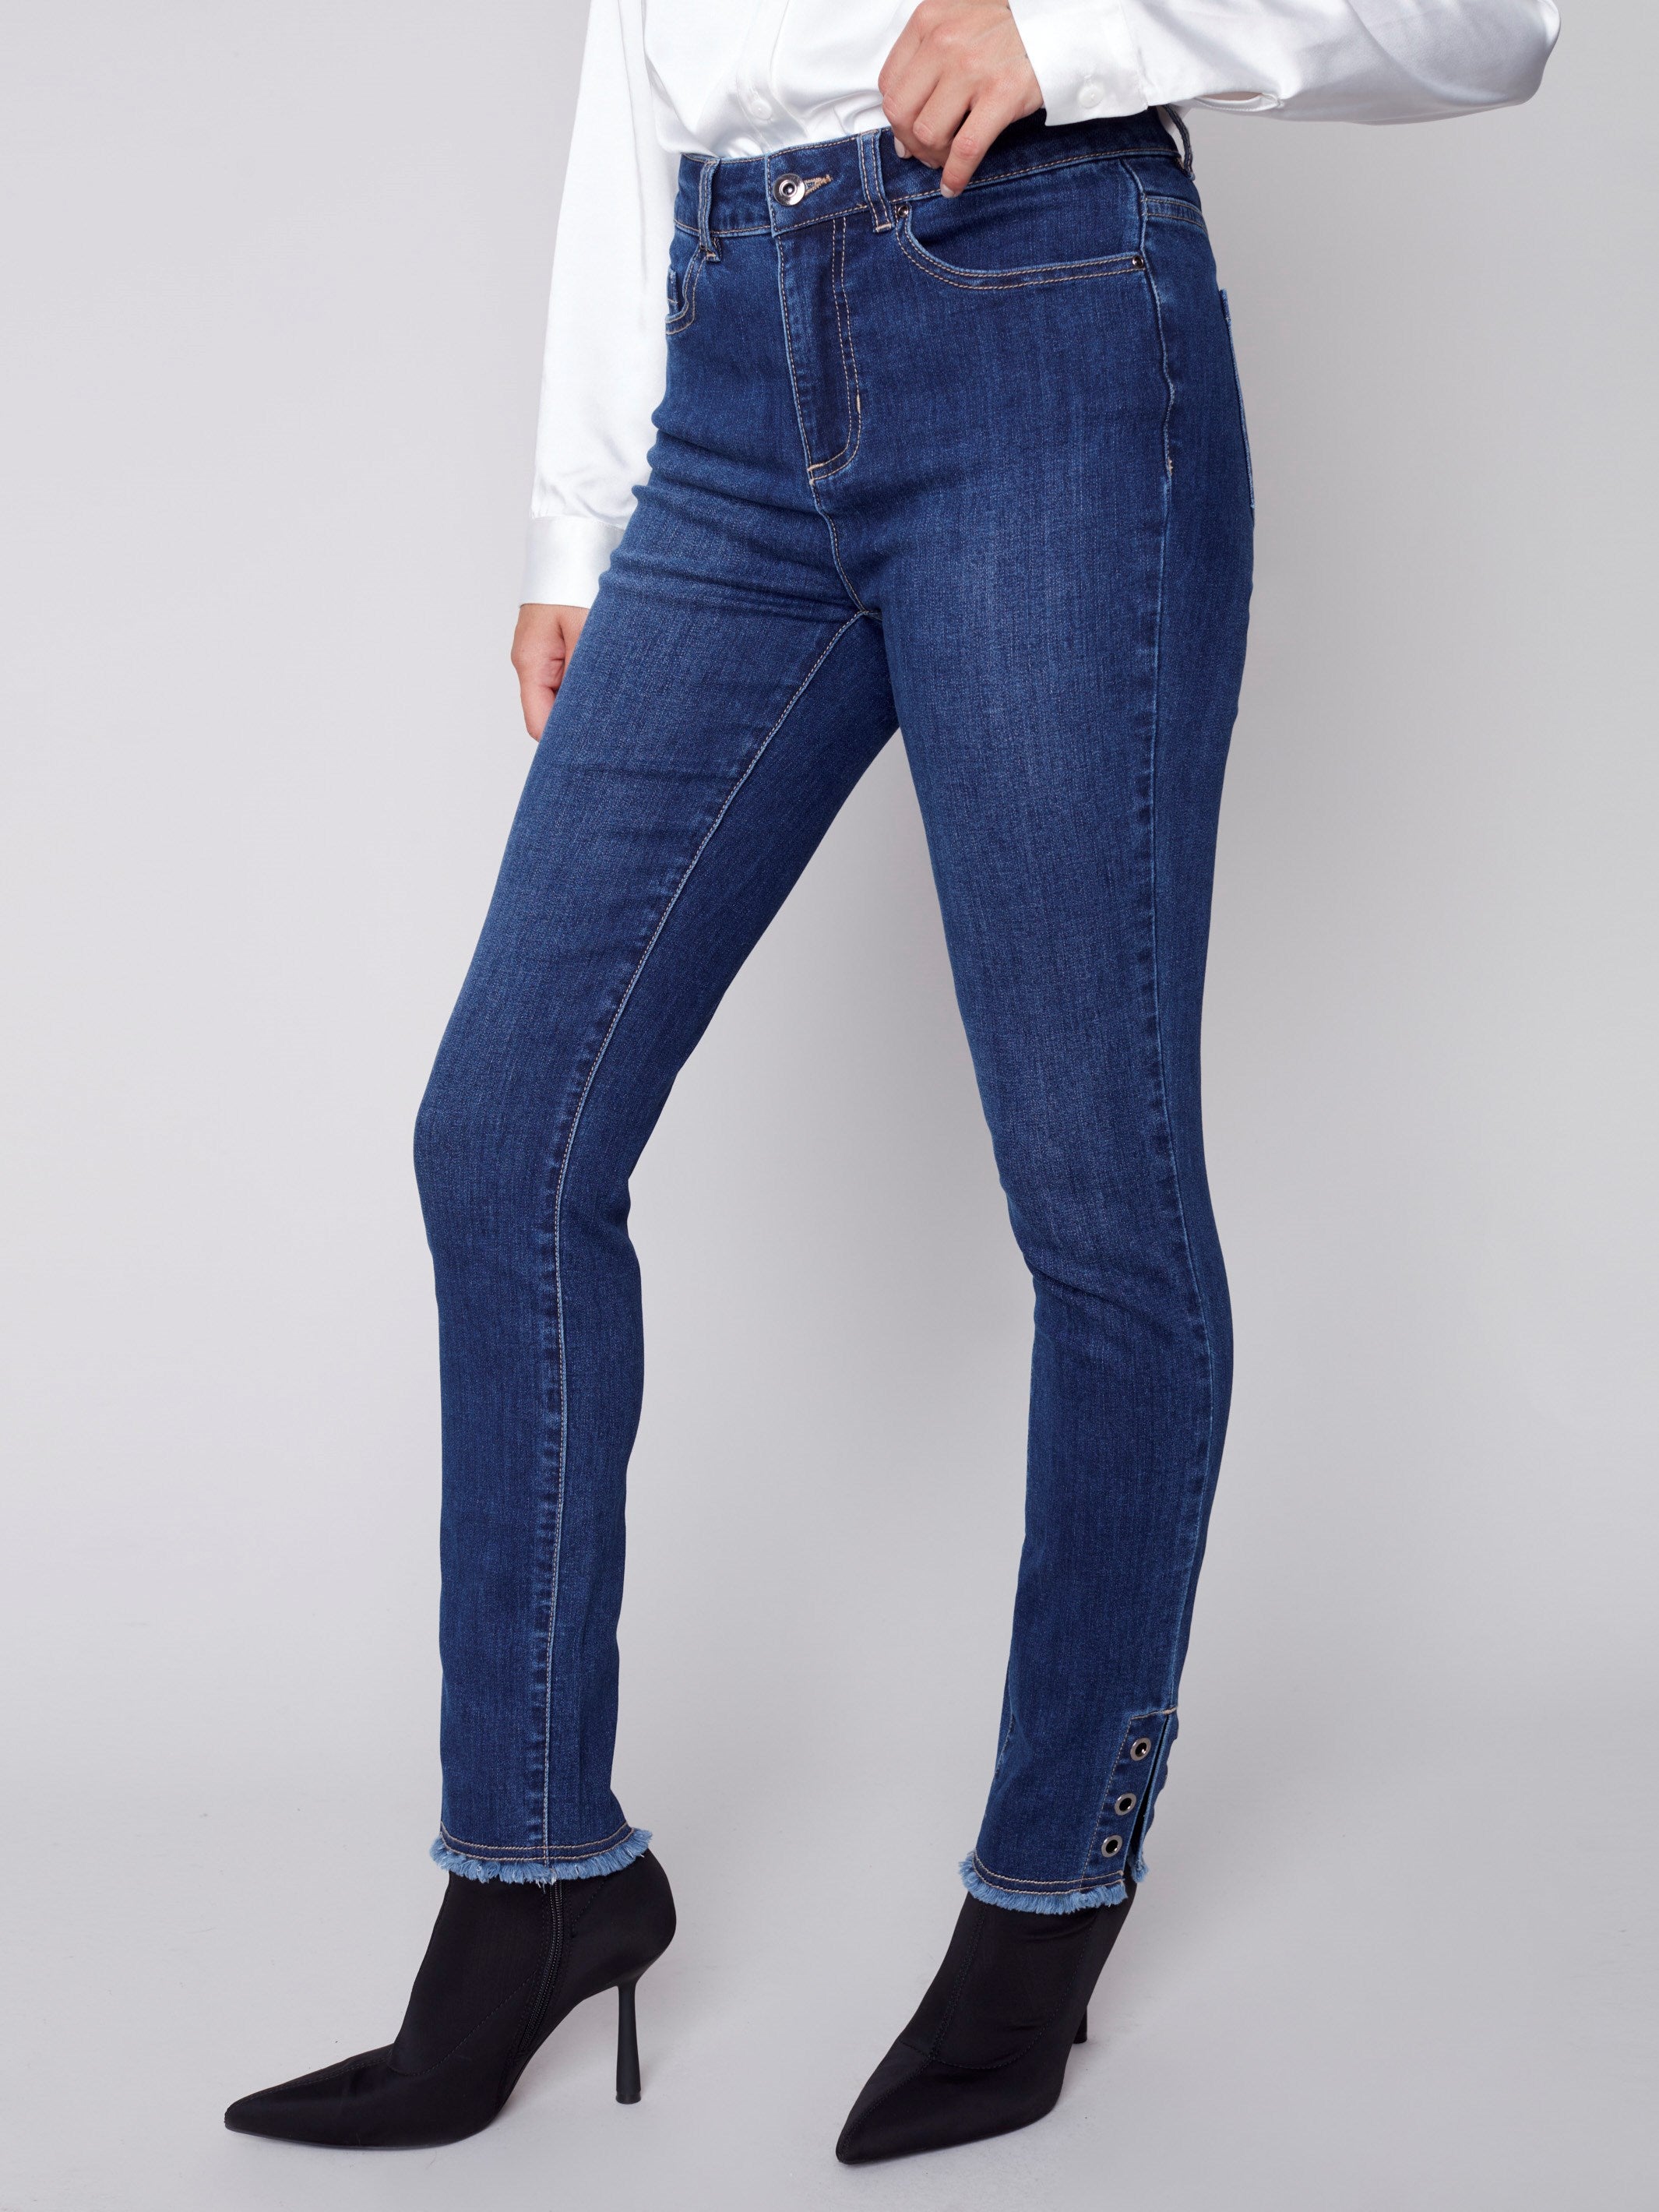 Jeans with Eyelet Hem Detail - Indigo